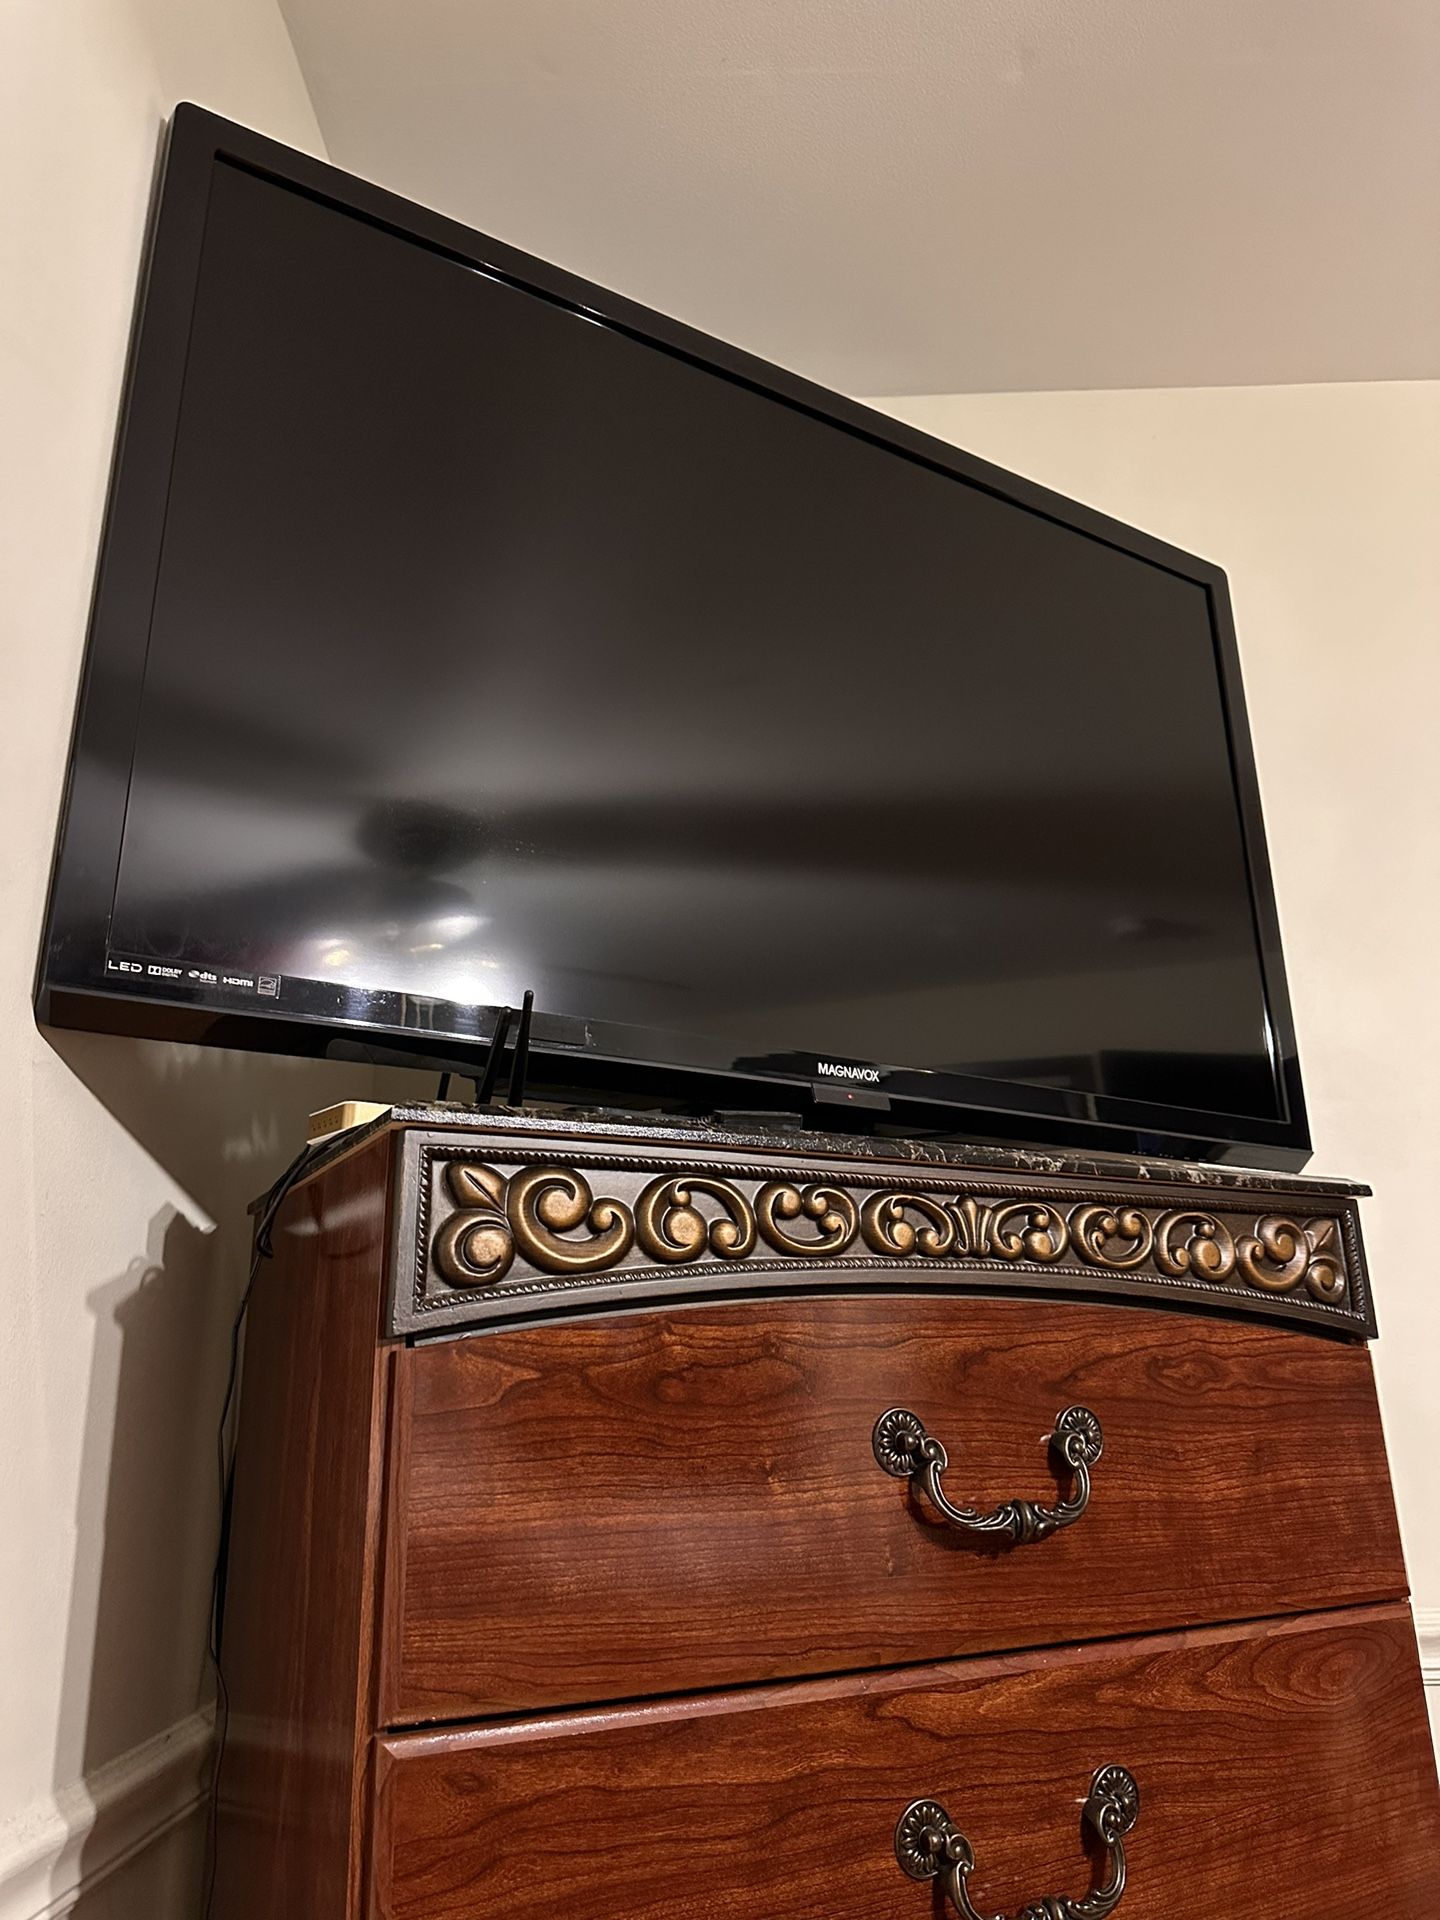 50” Magnavox Tv Perfect Condition 